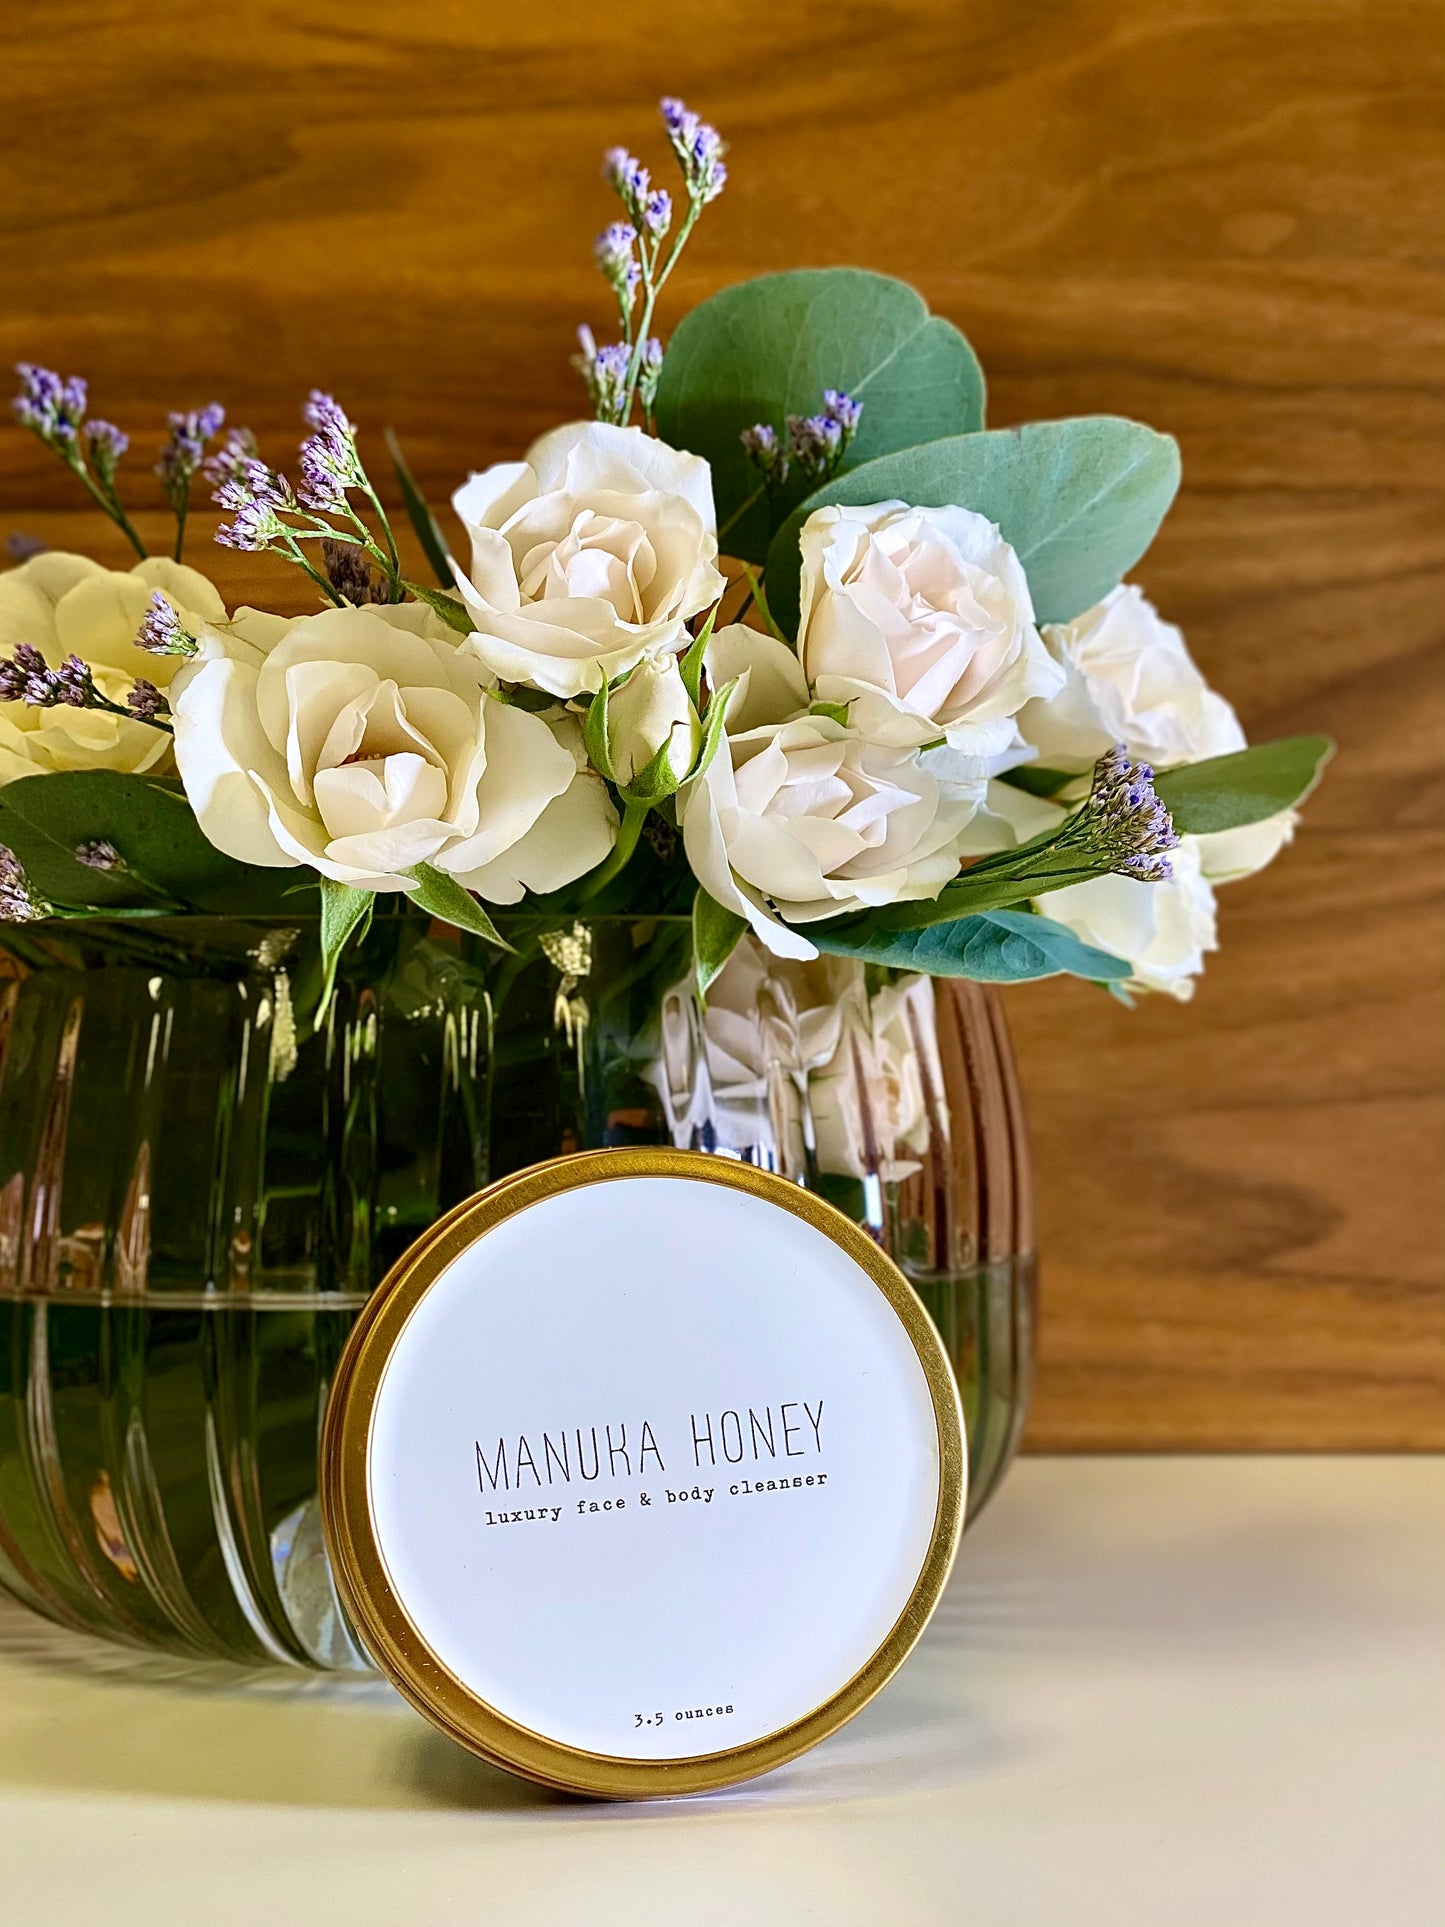 Manuka Honey - Luxury Face & Body Cleanser